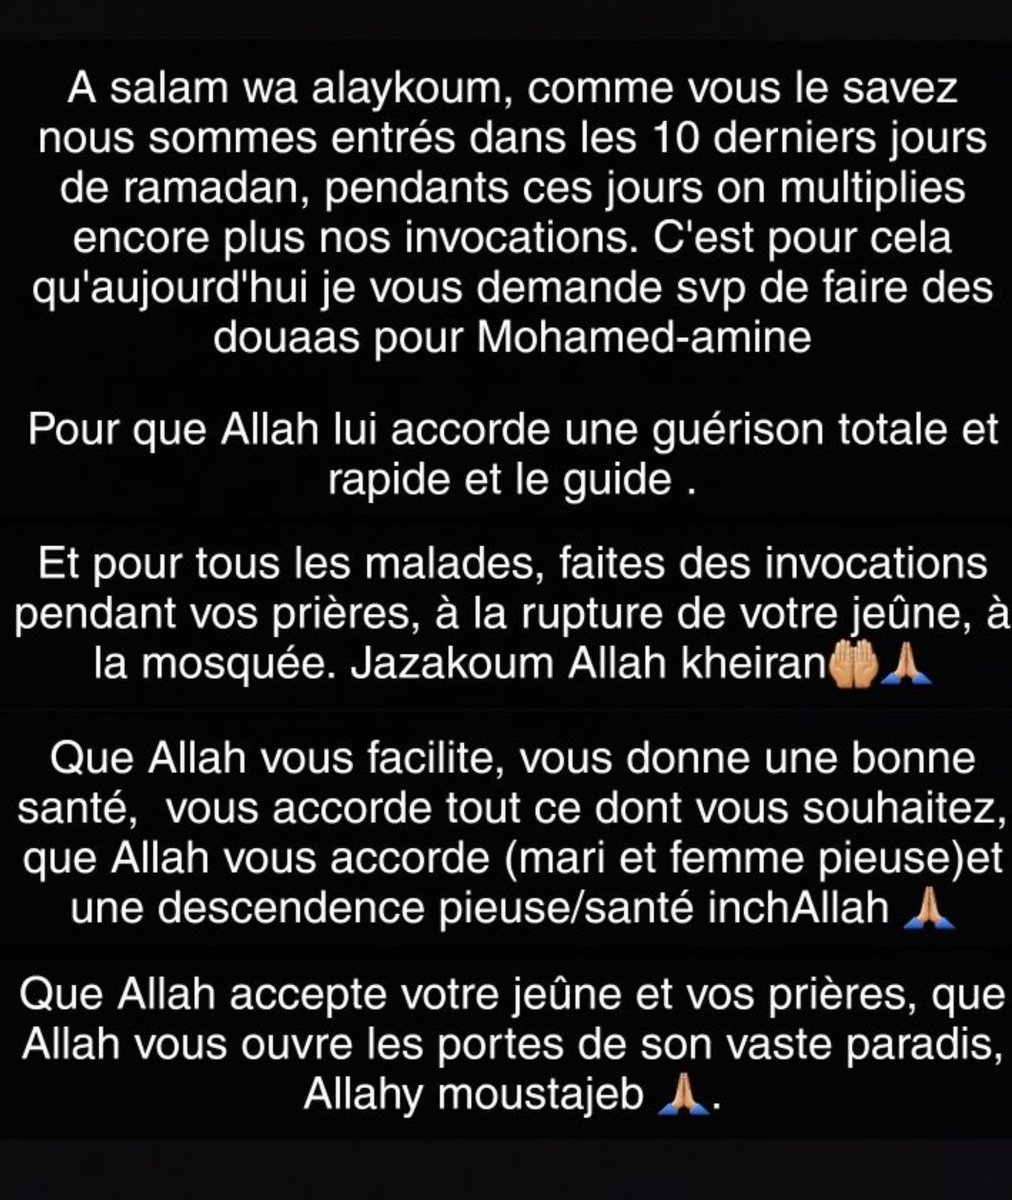 #Ramadan #nuitdudestin #douaas #MohamedAmine #invocations #10derniersjours #OnMultiplie #salamalaikoum  @Fianso #RT pour #MohamedAmine